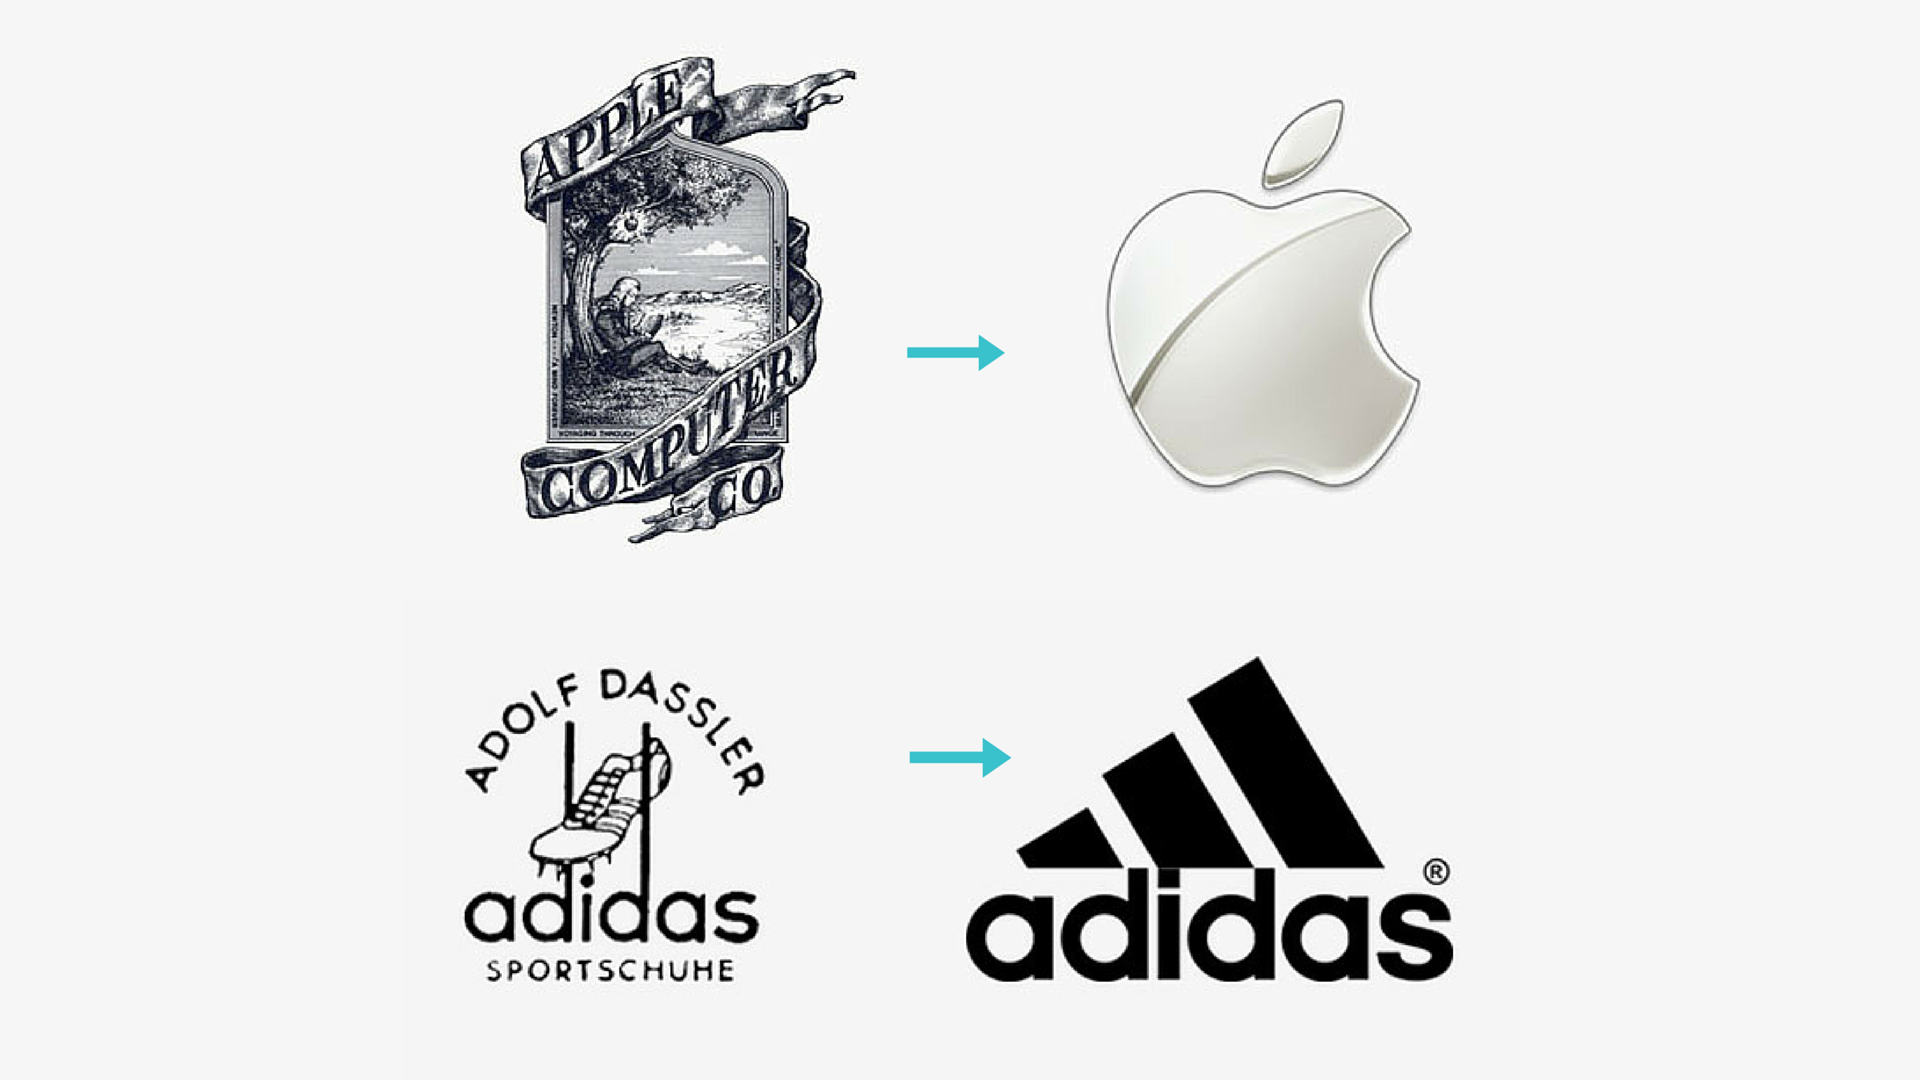 evolution logo adidas